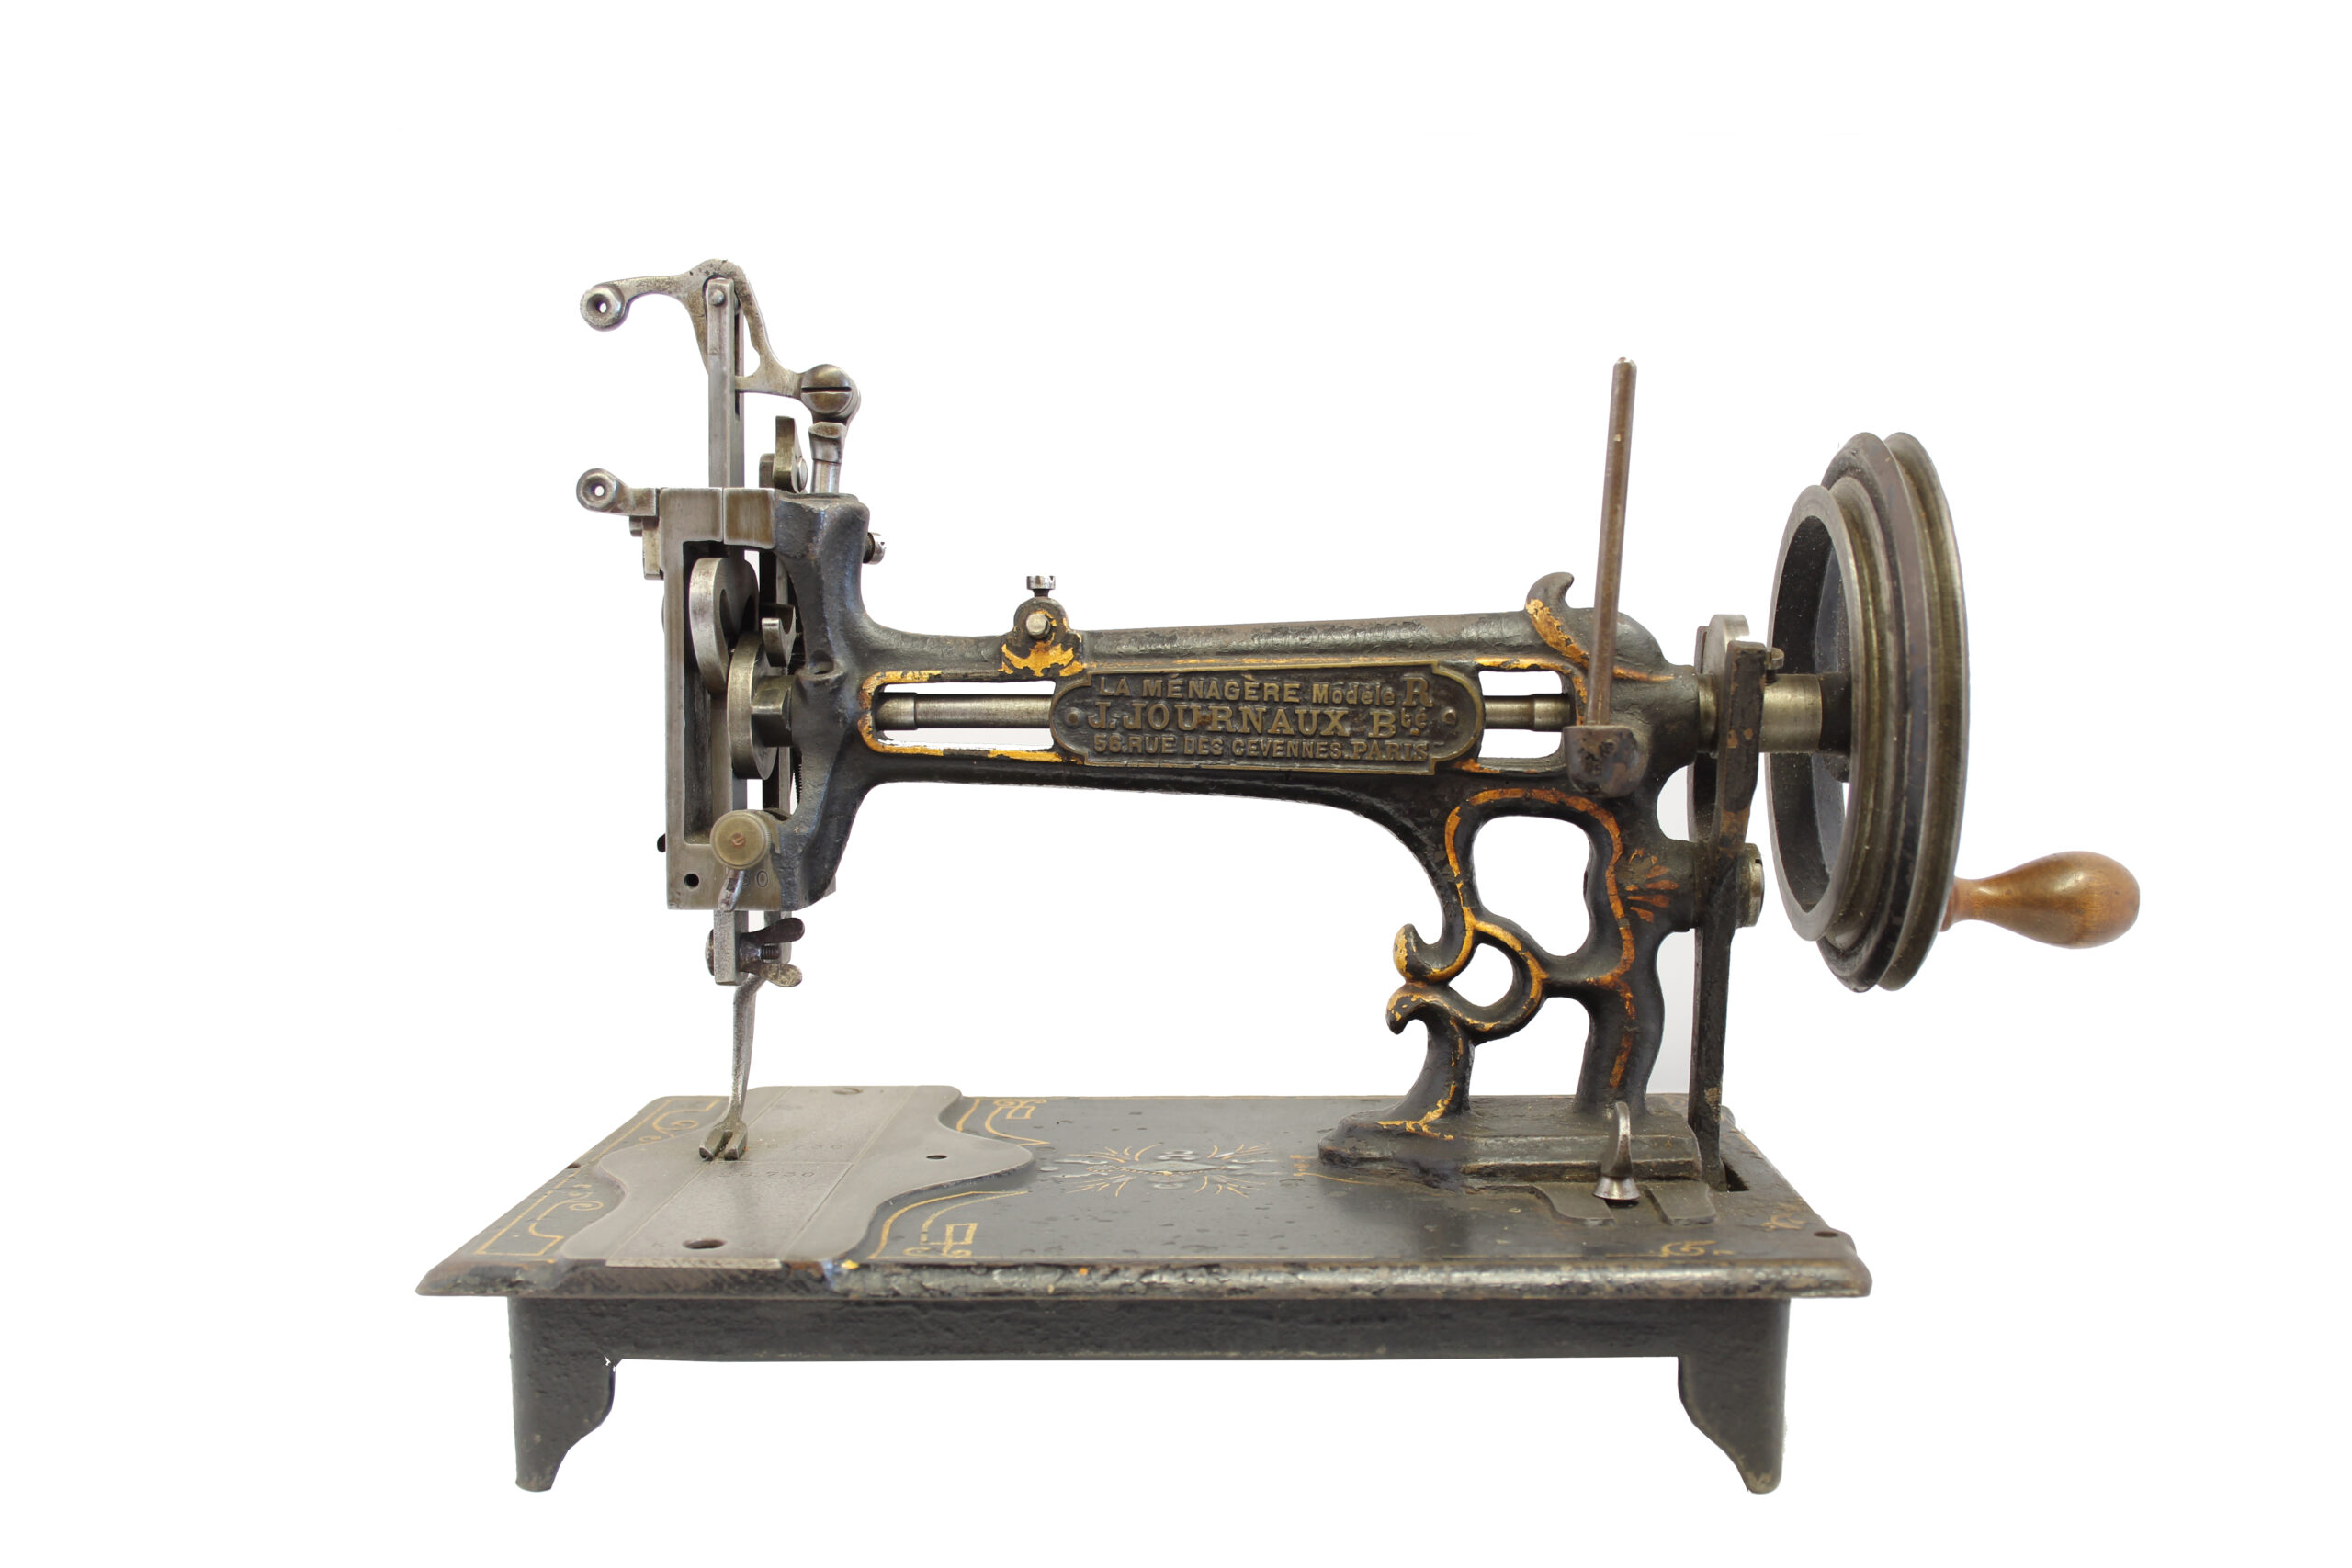 Singer Sewing Machine - UTSA Institute Of Texan Cultures